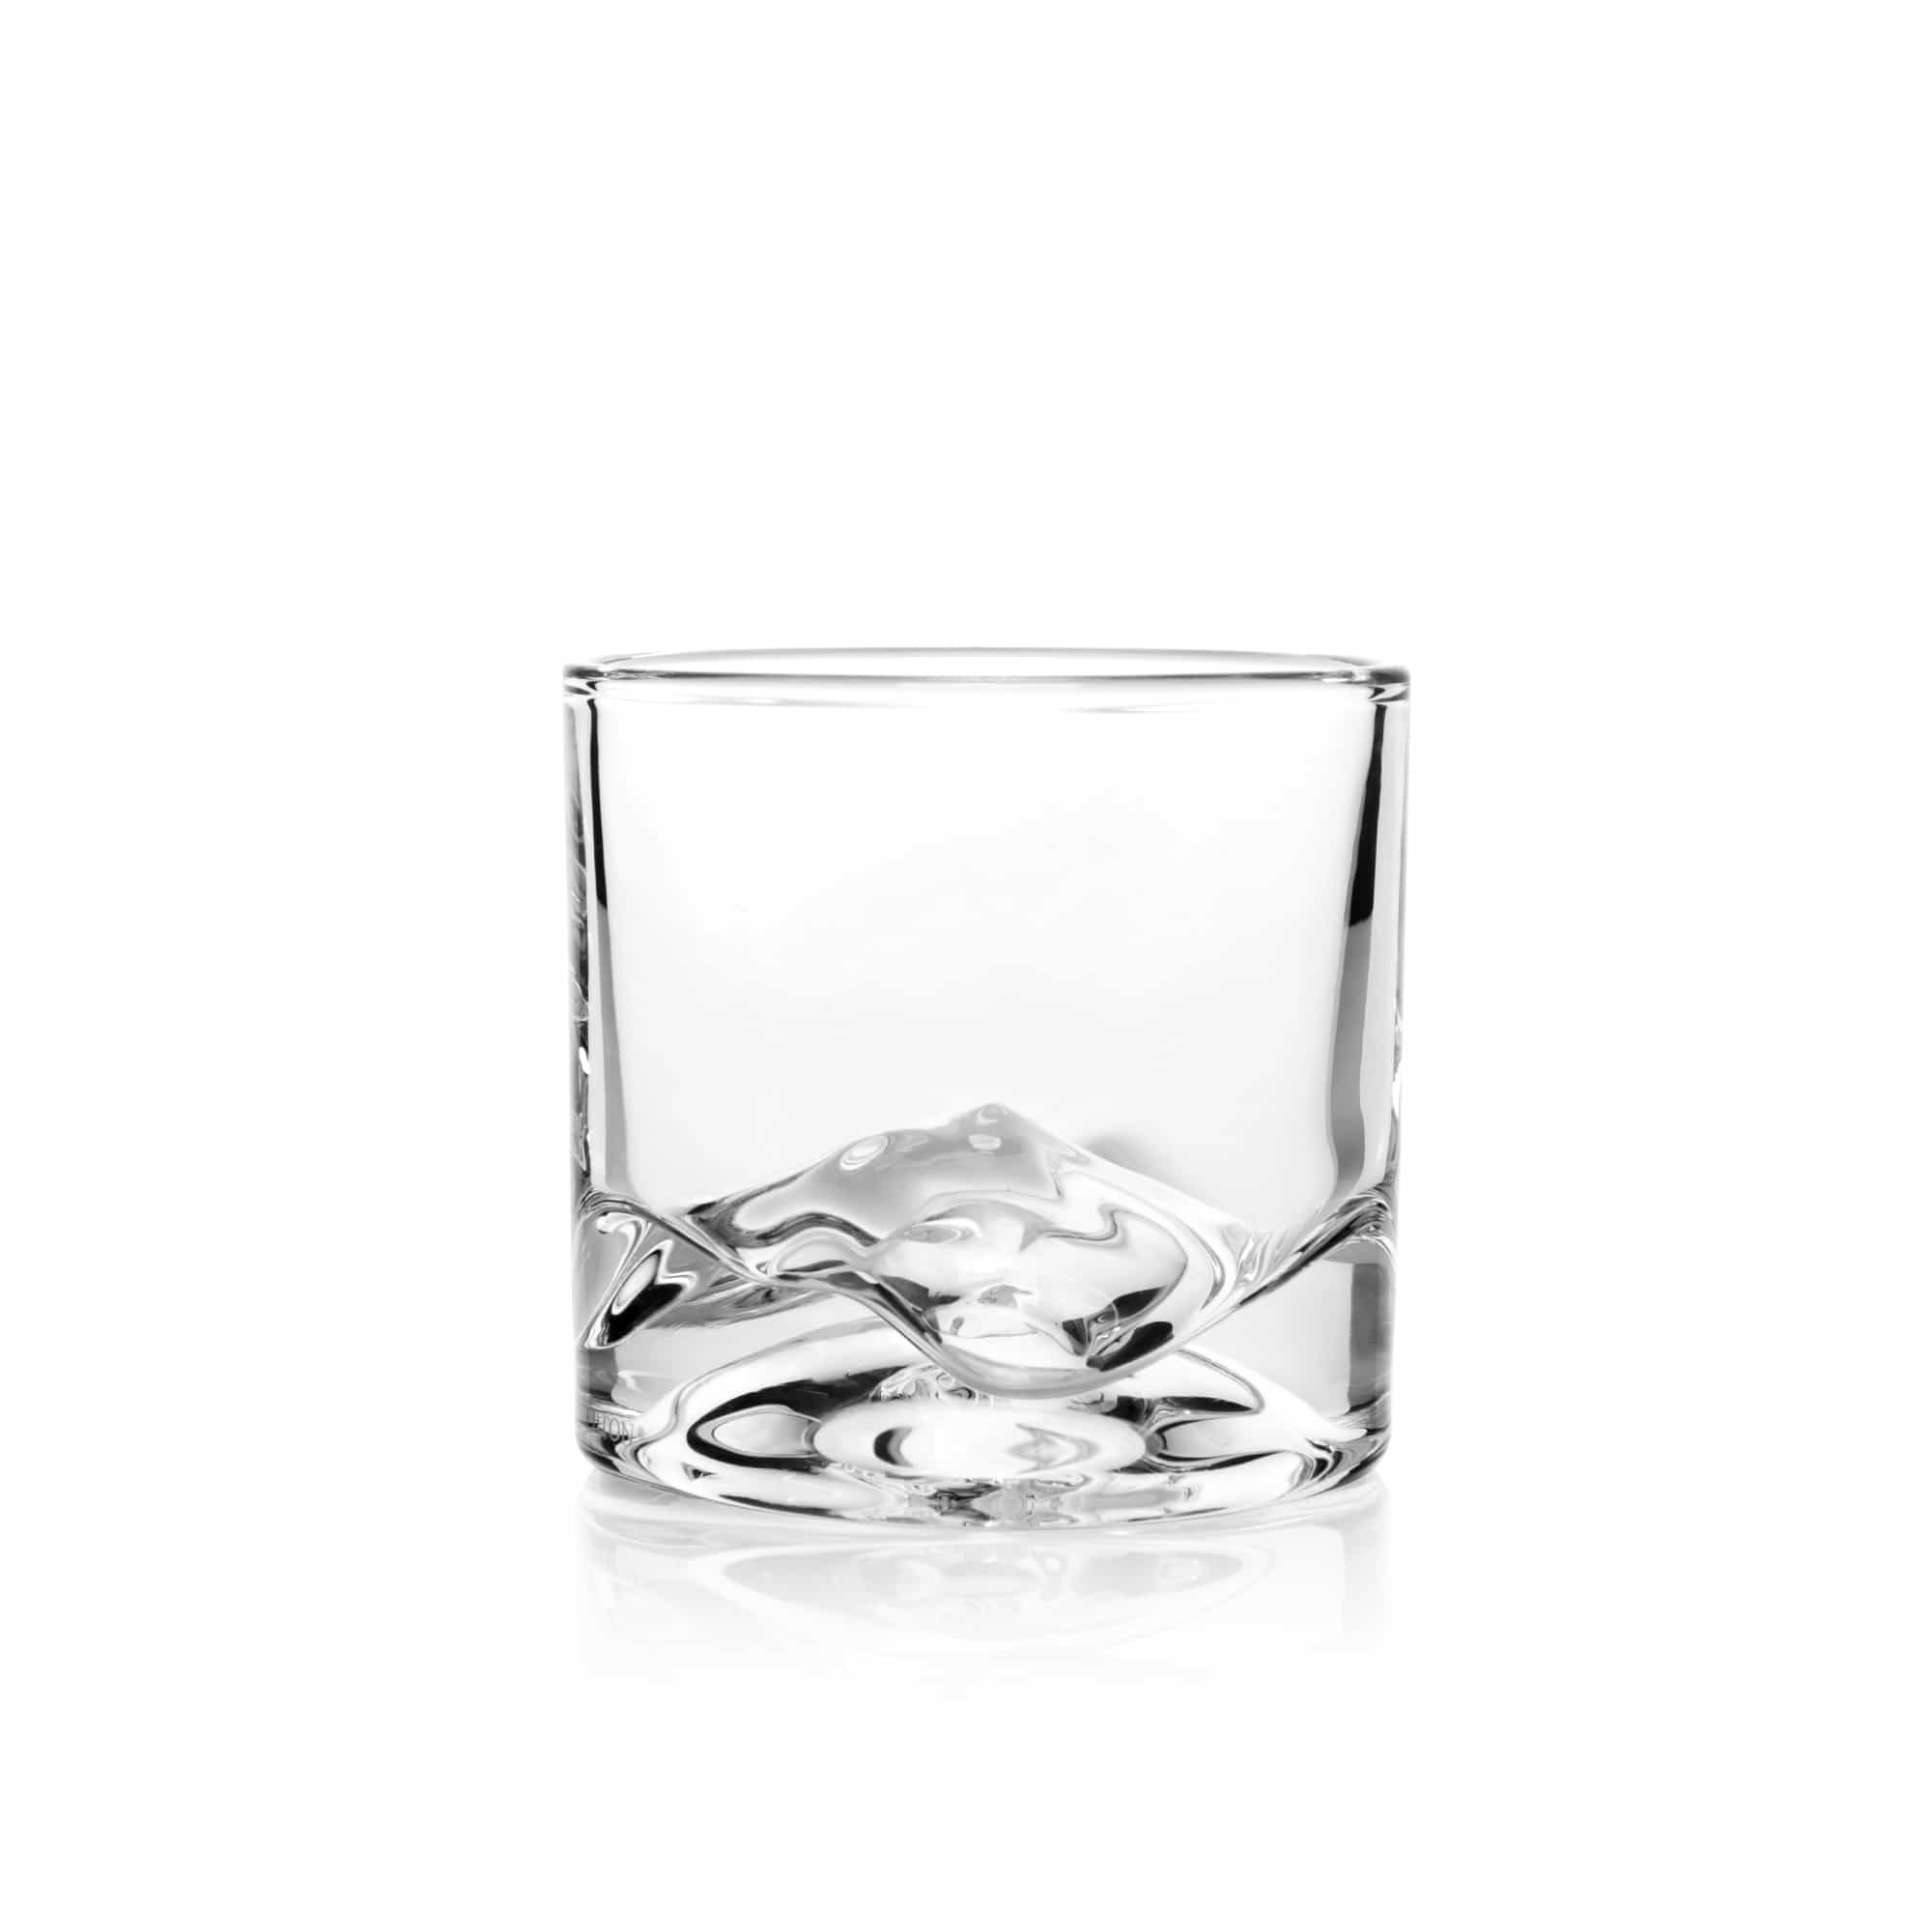 Whiskygläser Liiton "Mont Blanc" - 2er-Set